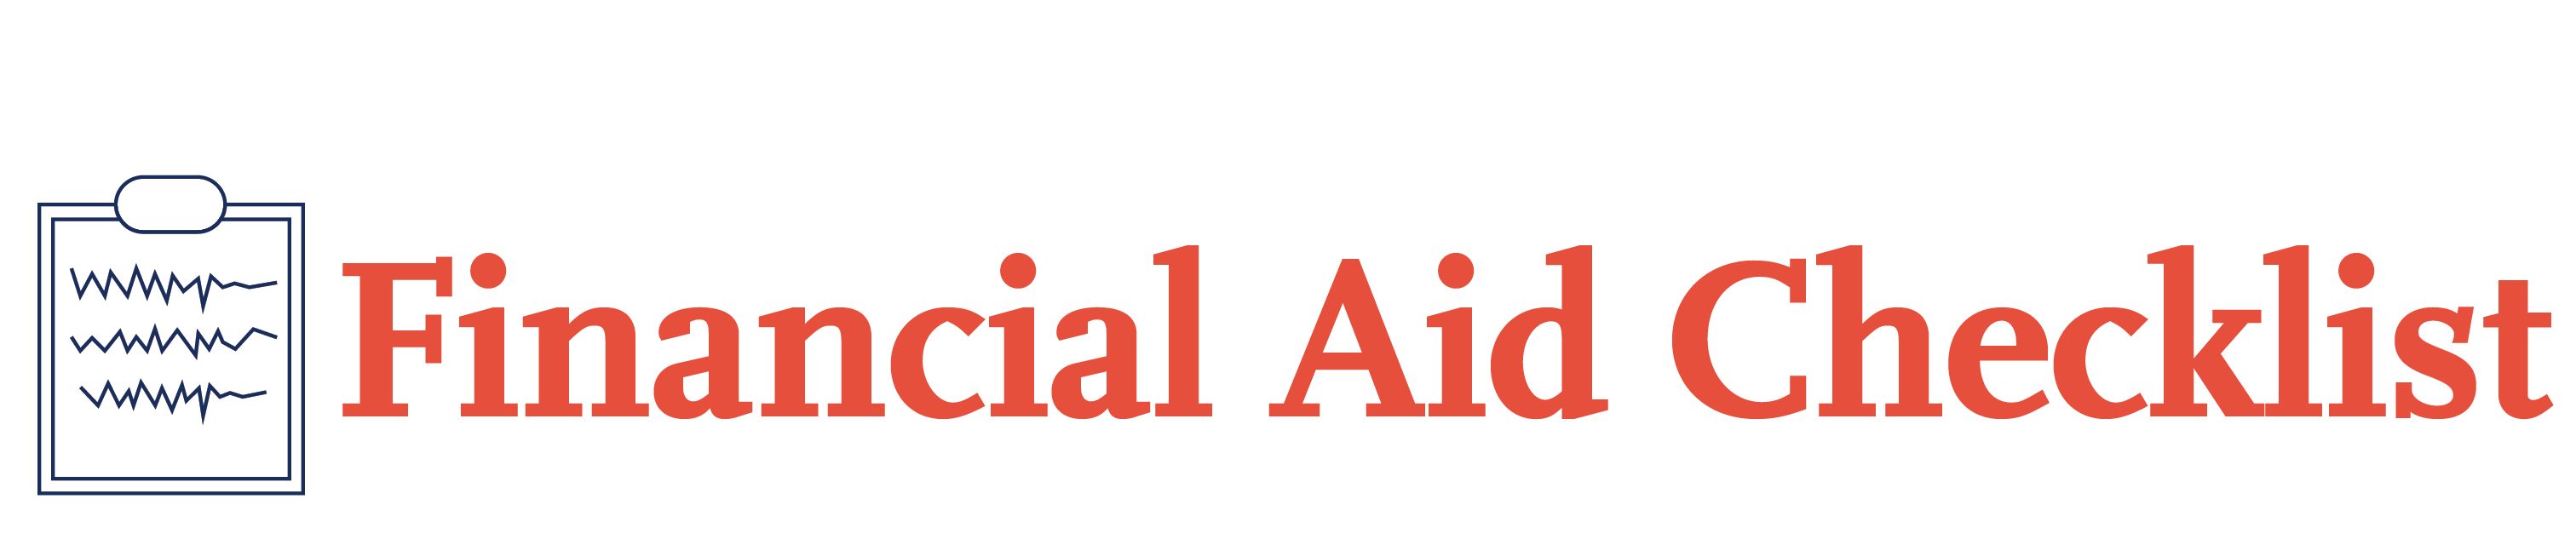 Financial Aid Checklist